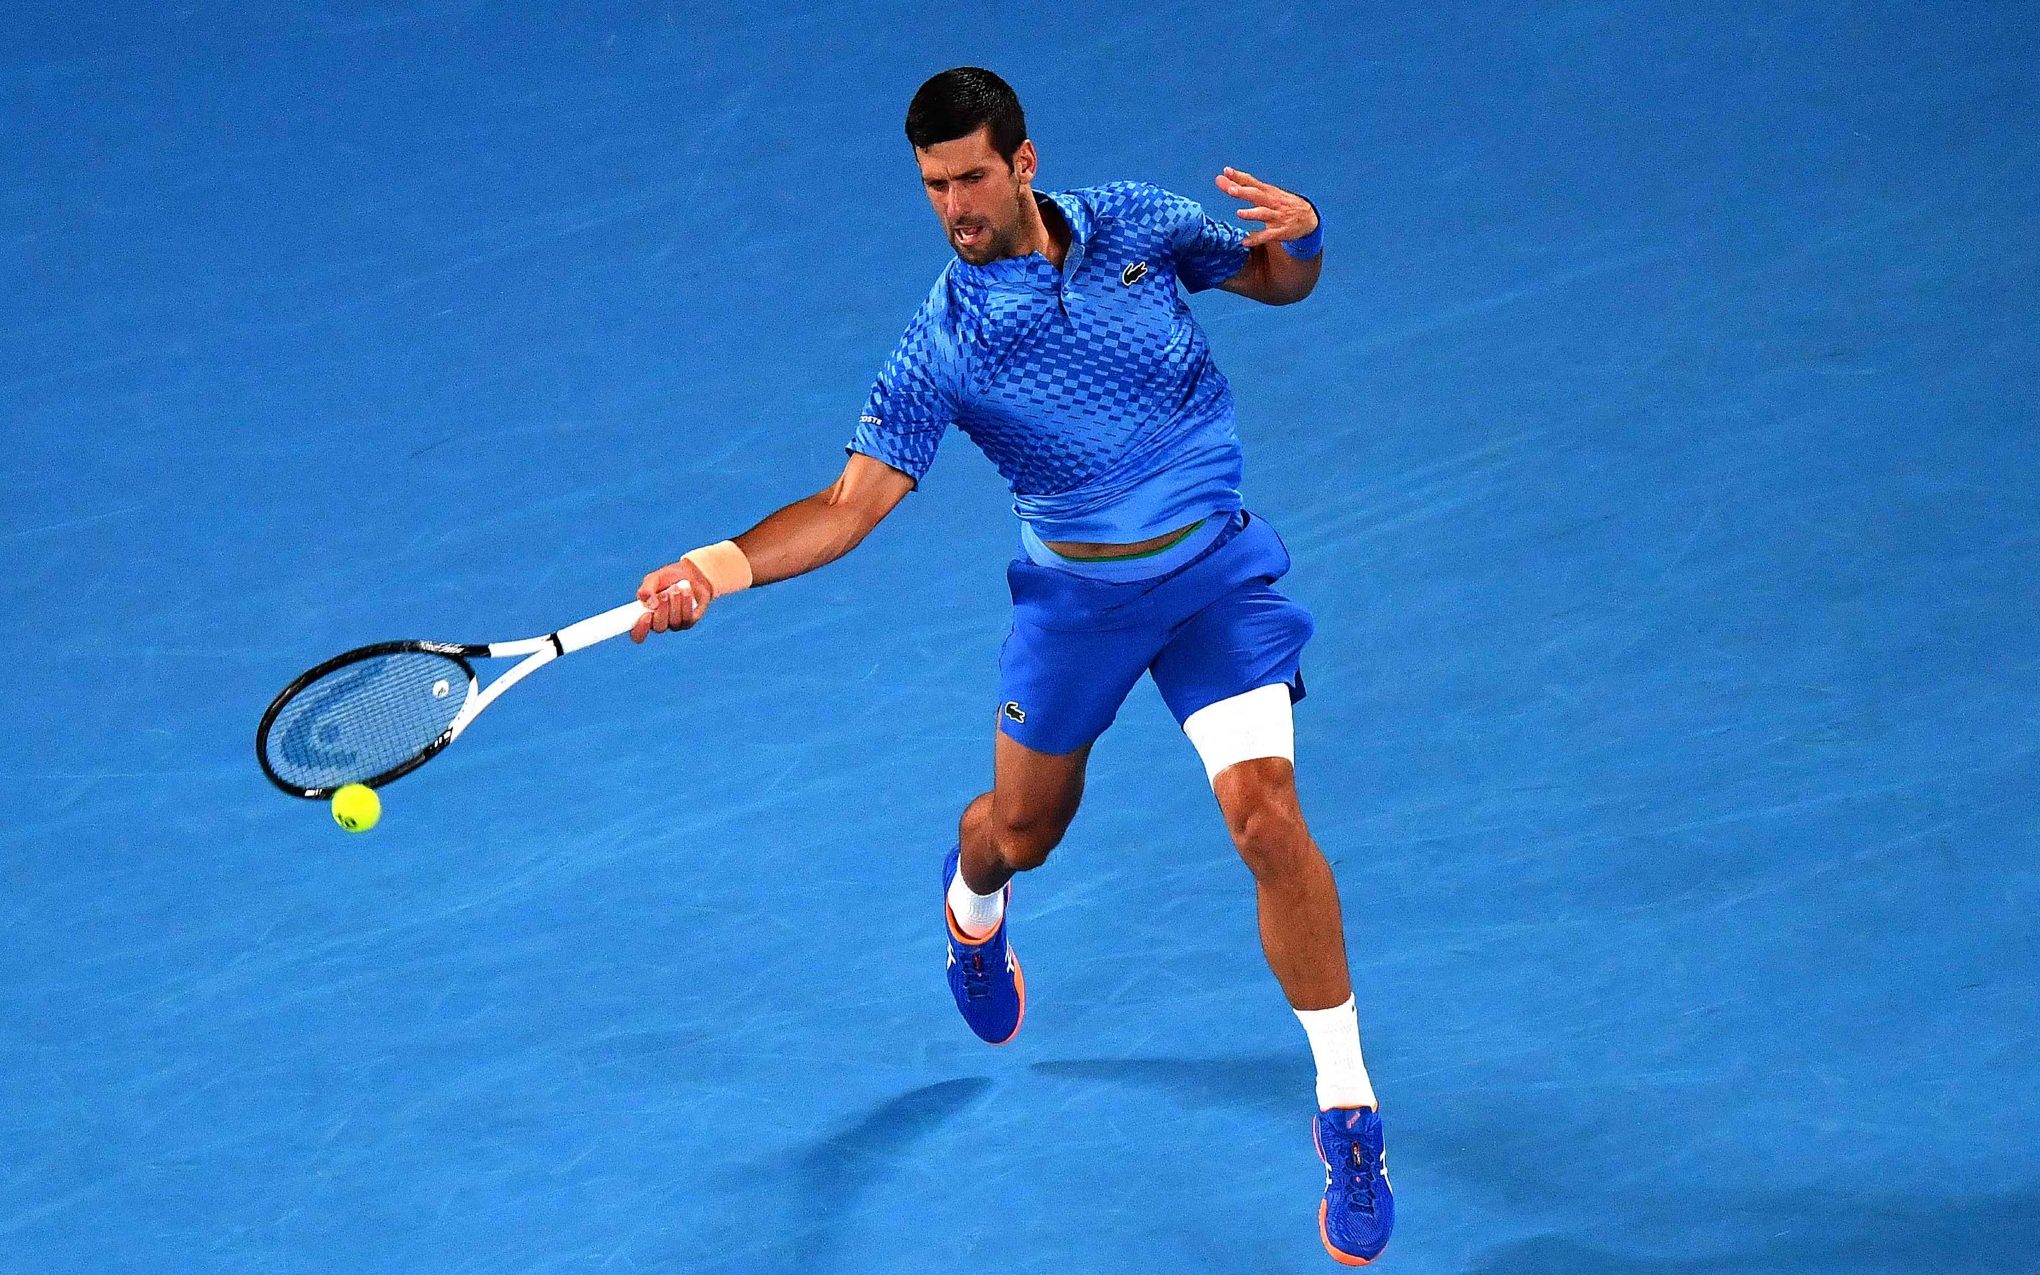 Djokovic vs Baena Highlights: Novak Djokovic brushes past Roberto Carballes Baena in straight sets, advances to second round in Australian Open -Watch Highlights